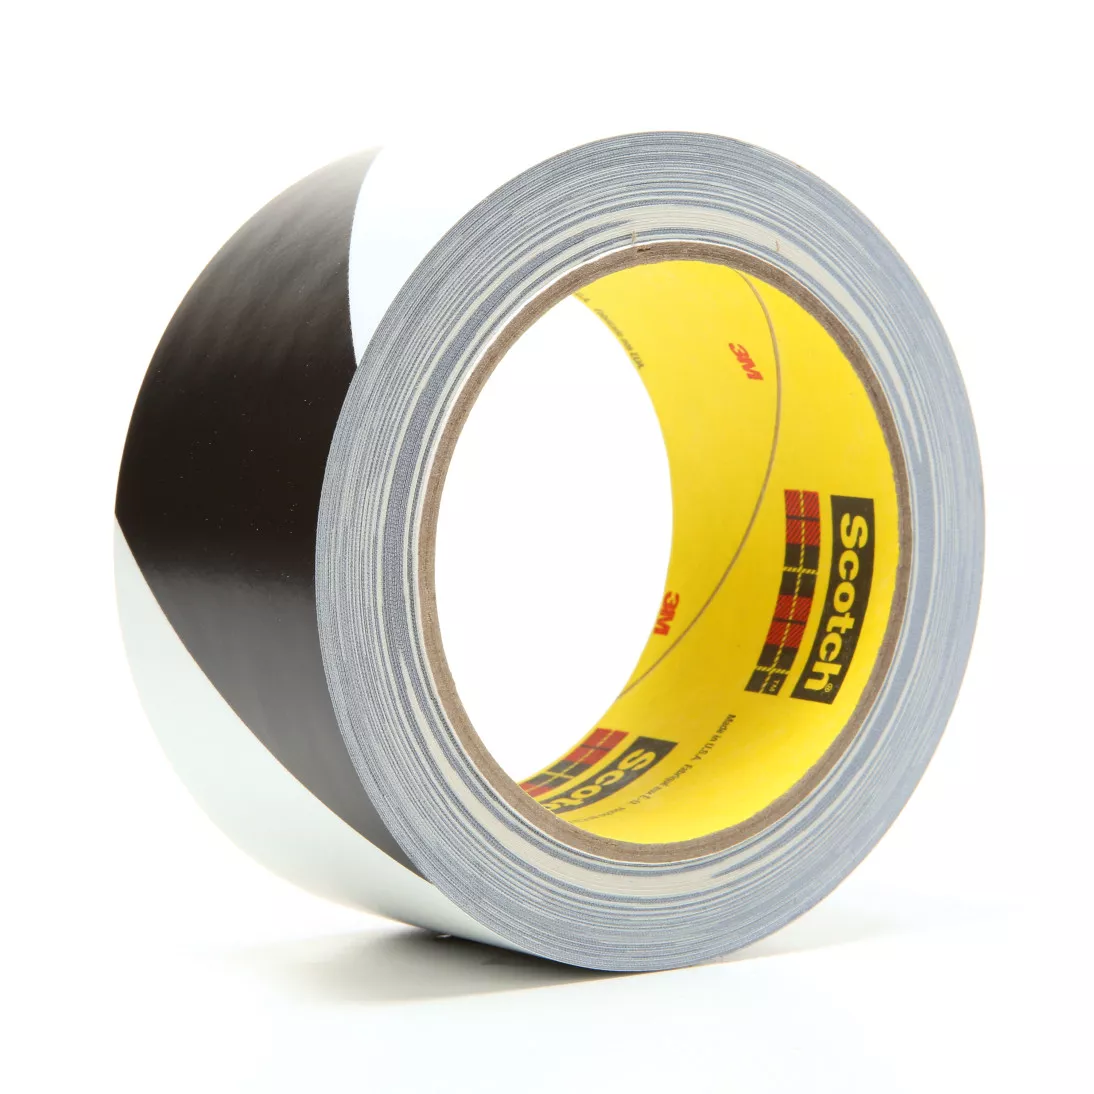 3M™ Safety Stripe Vinyl Tape 5700, Black/White, 2 in x 36 yd, 5.4 mil, 24 Roll/Case